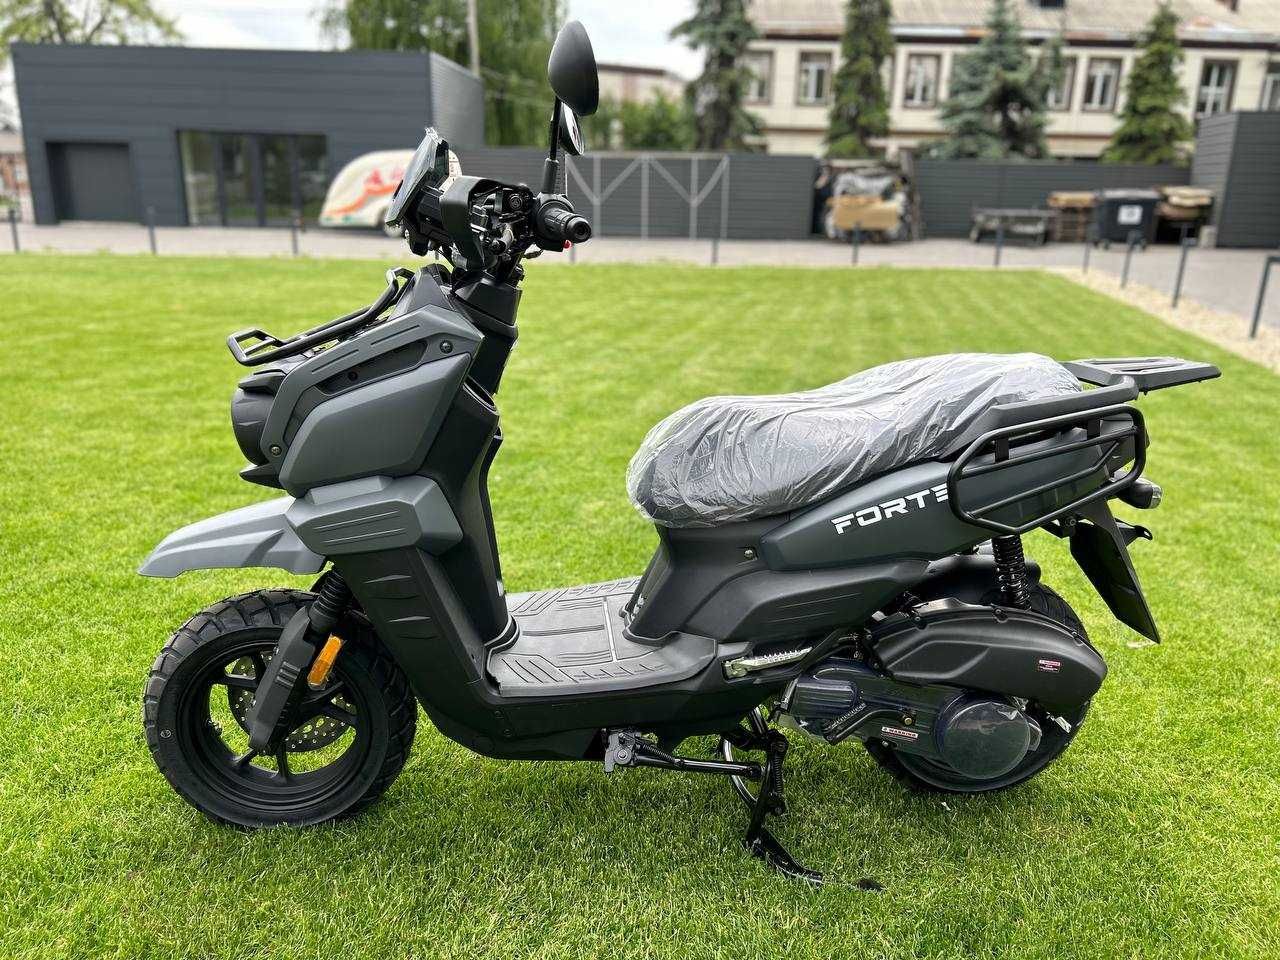 Новый скутер/мопед FORTE UNICORN 150 купить в мотосалоне Артмото Сумы